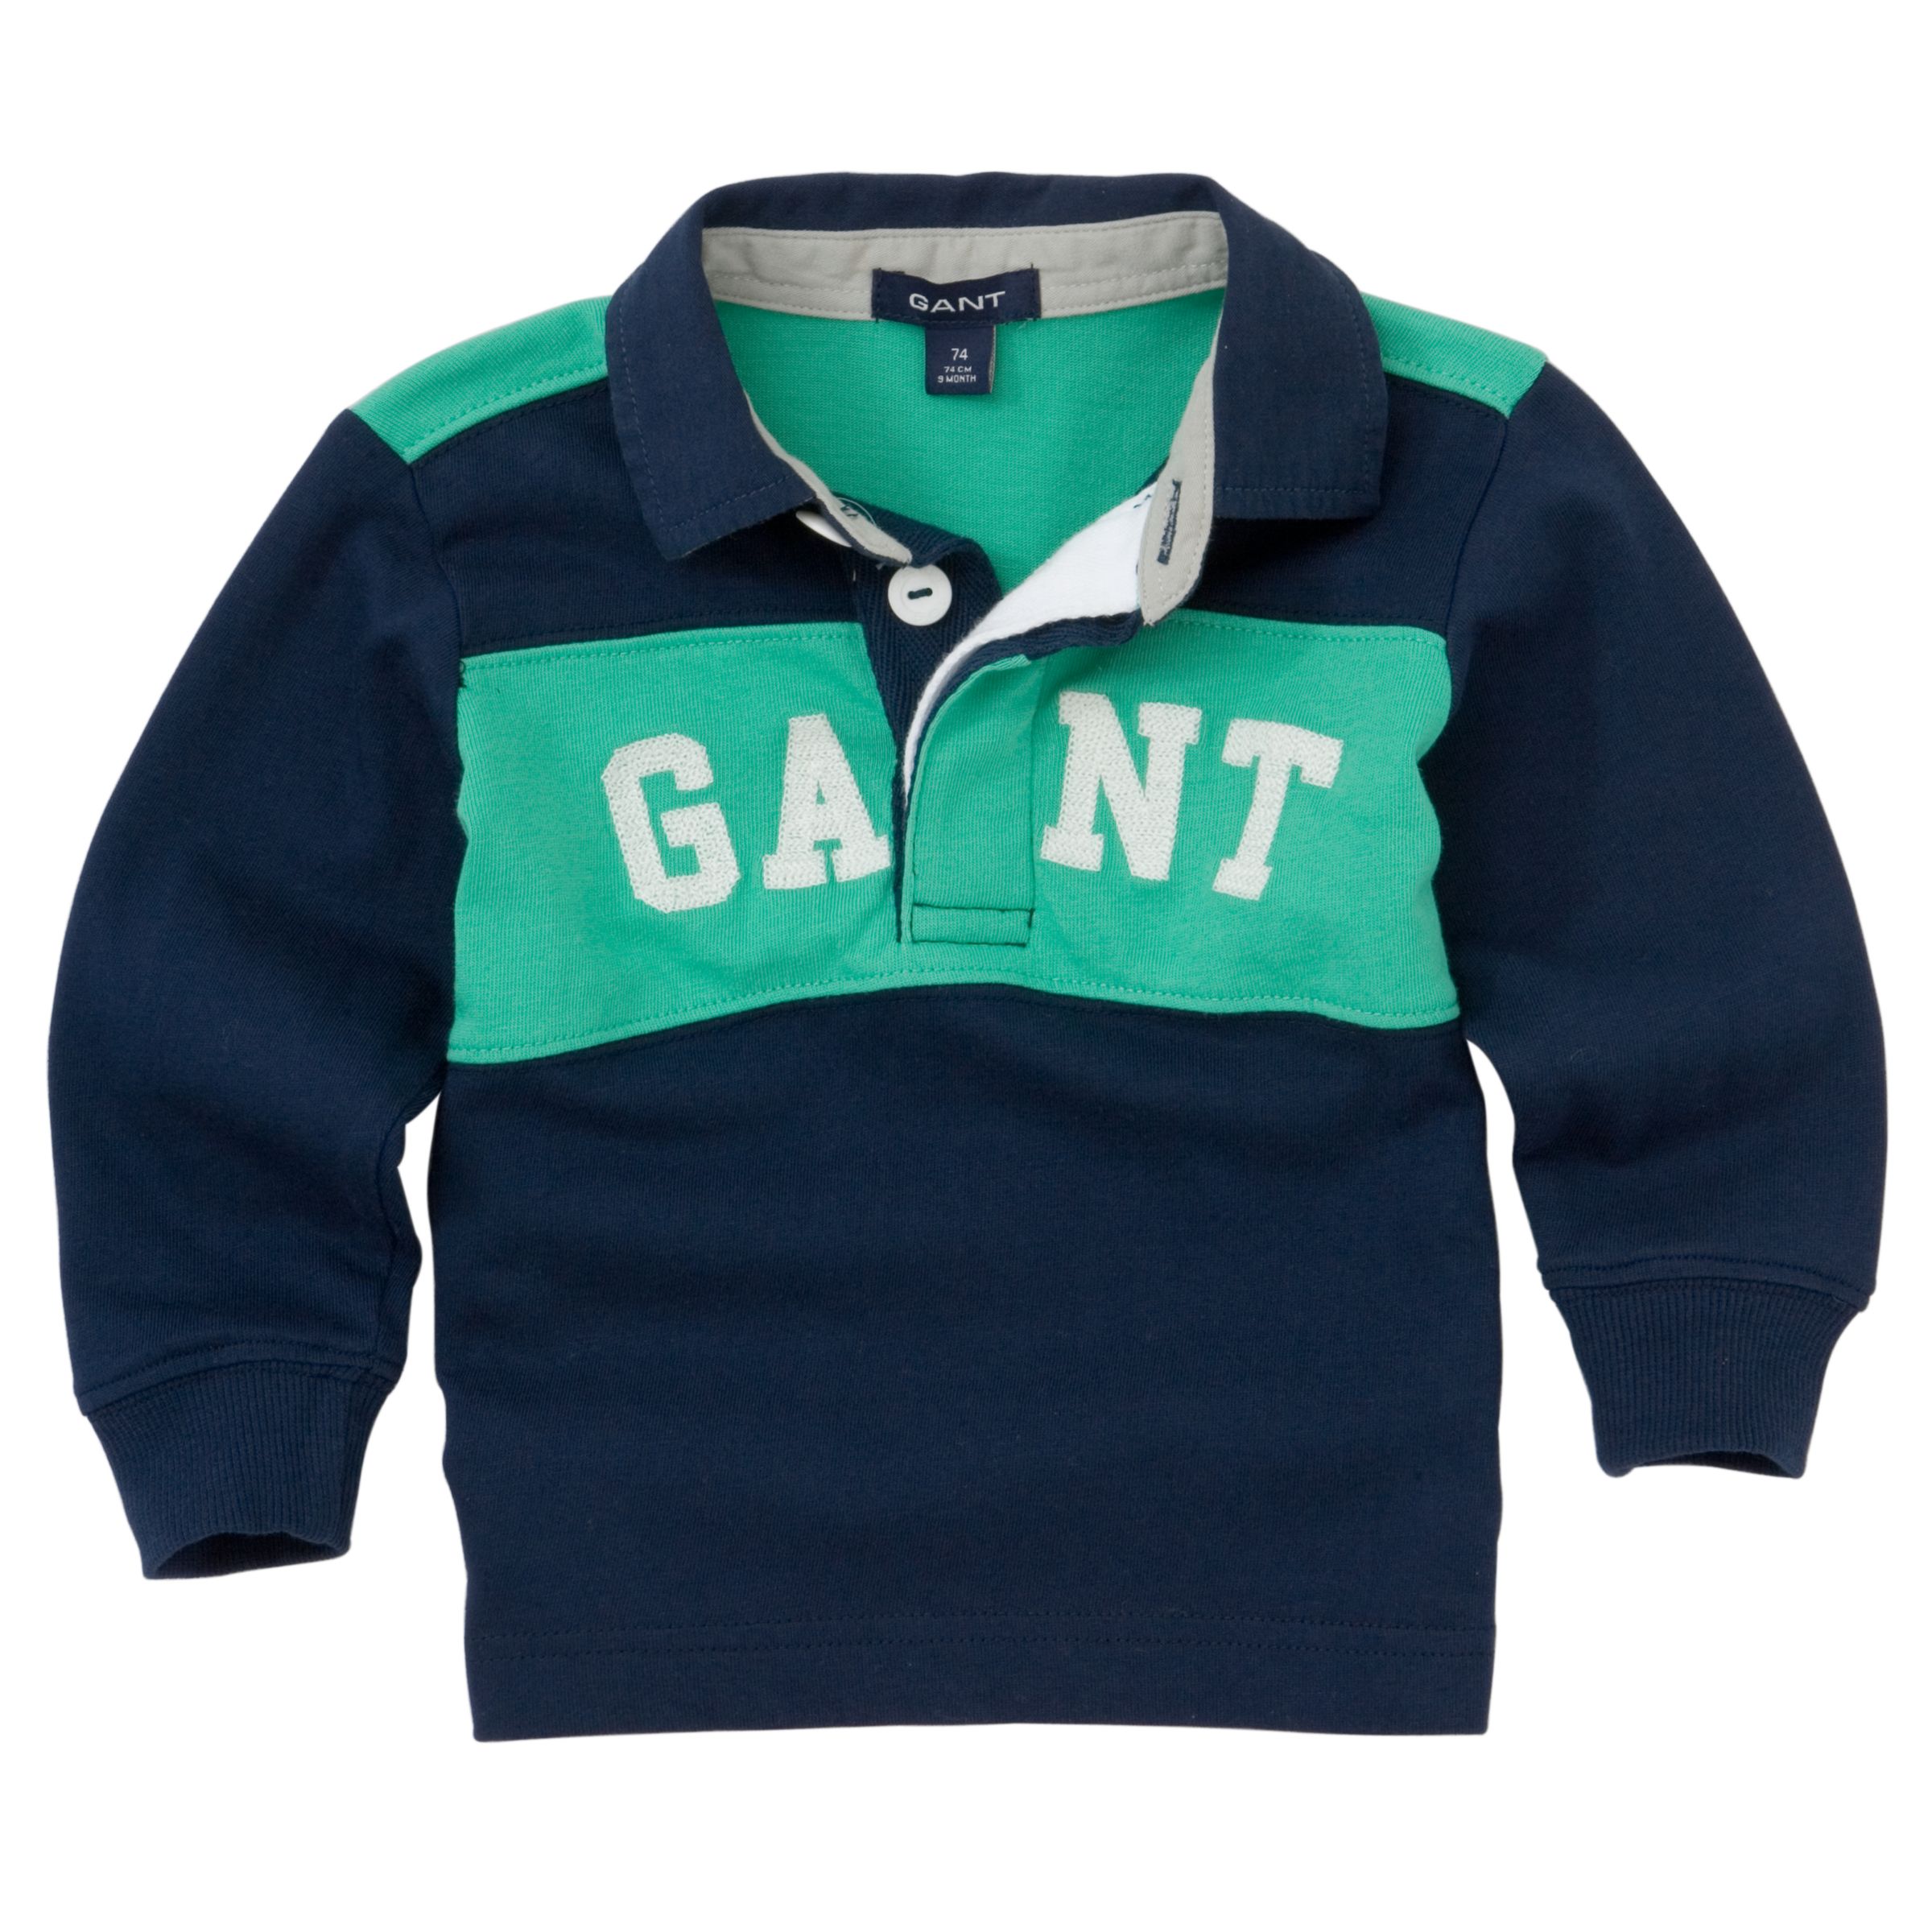 Gant Branded Long Sleeve Rugby Shirt, Blue/Green